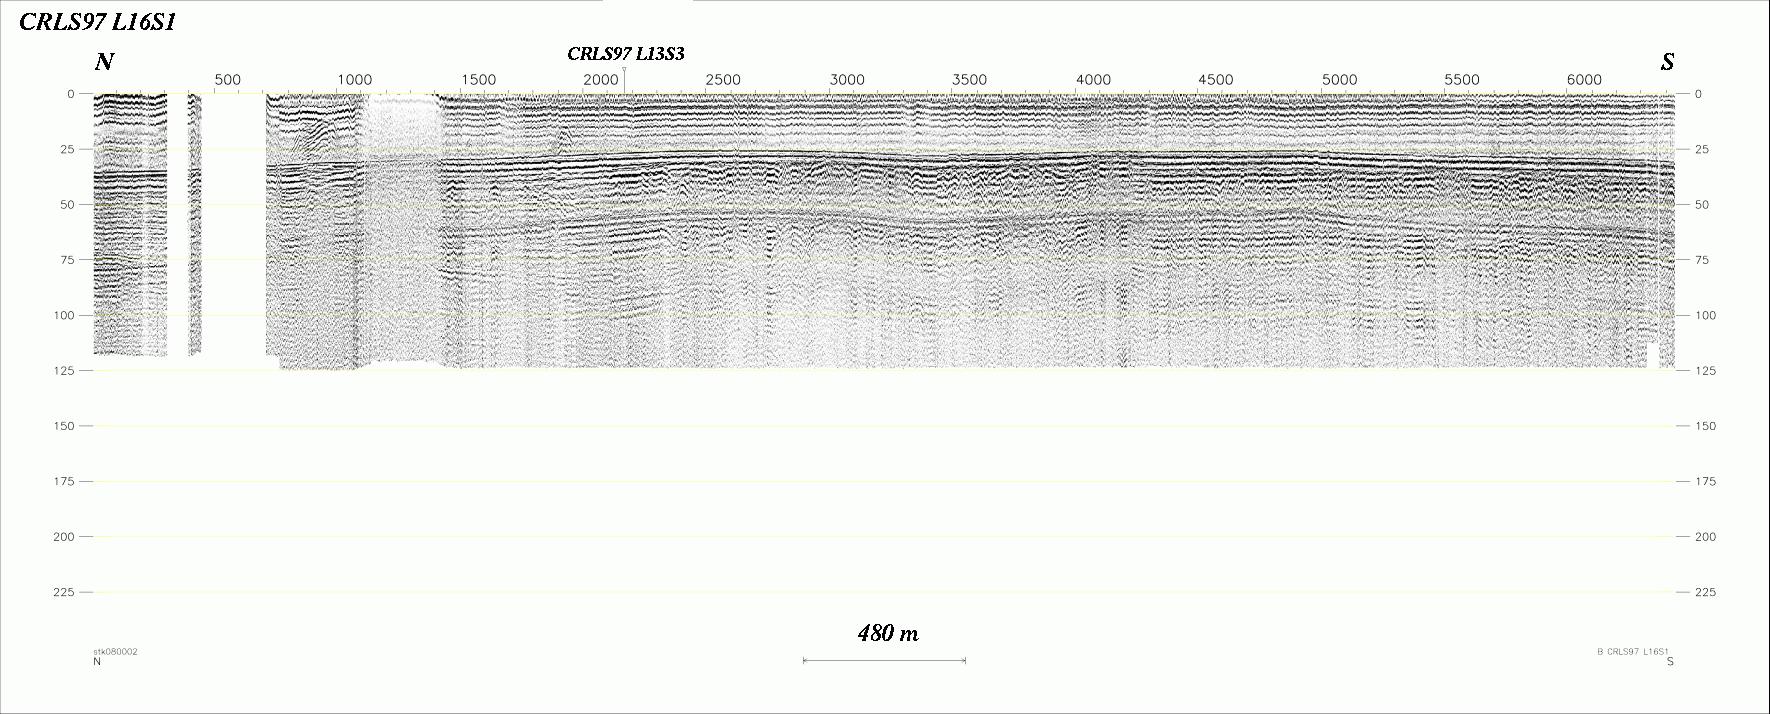 Seismic Reflection Profile Line No.: L16s1 (216848 bytes)